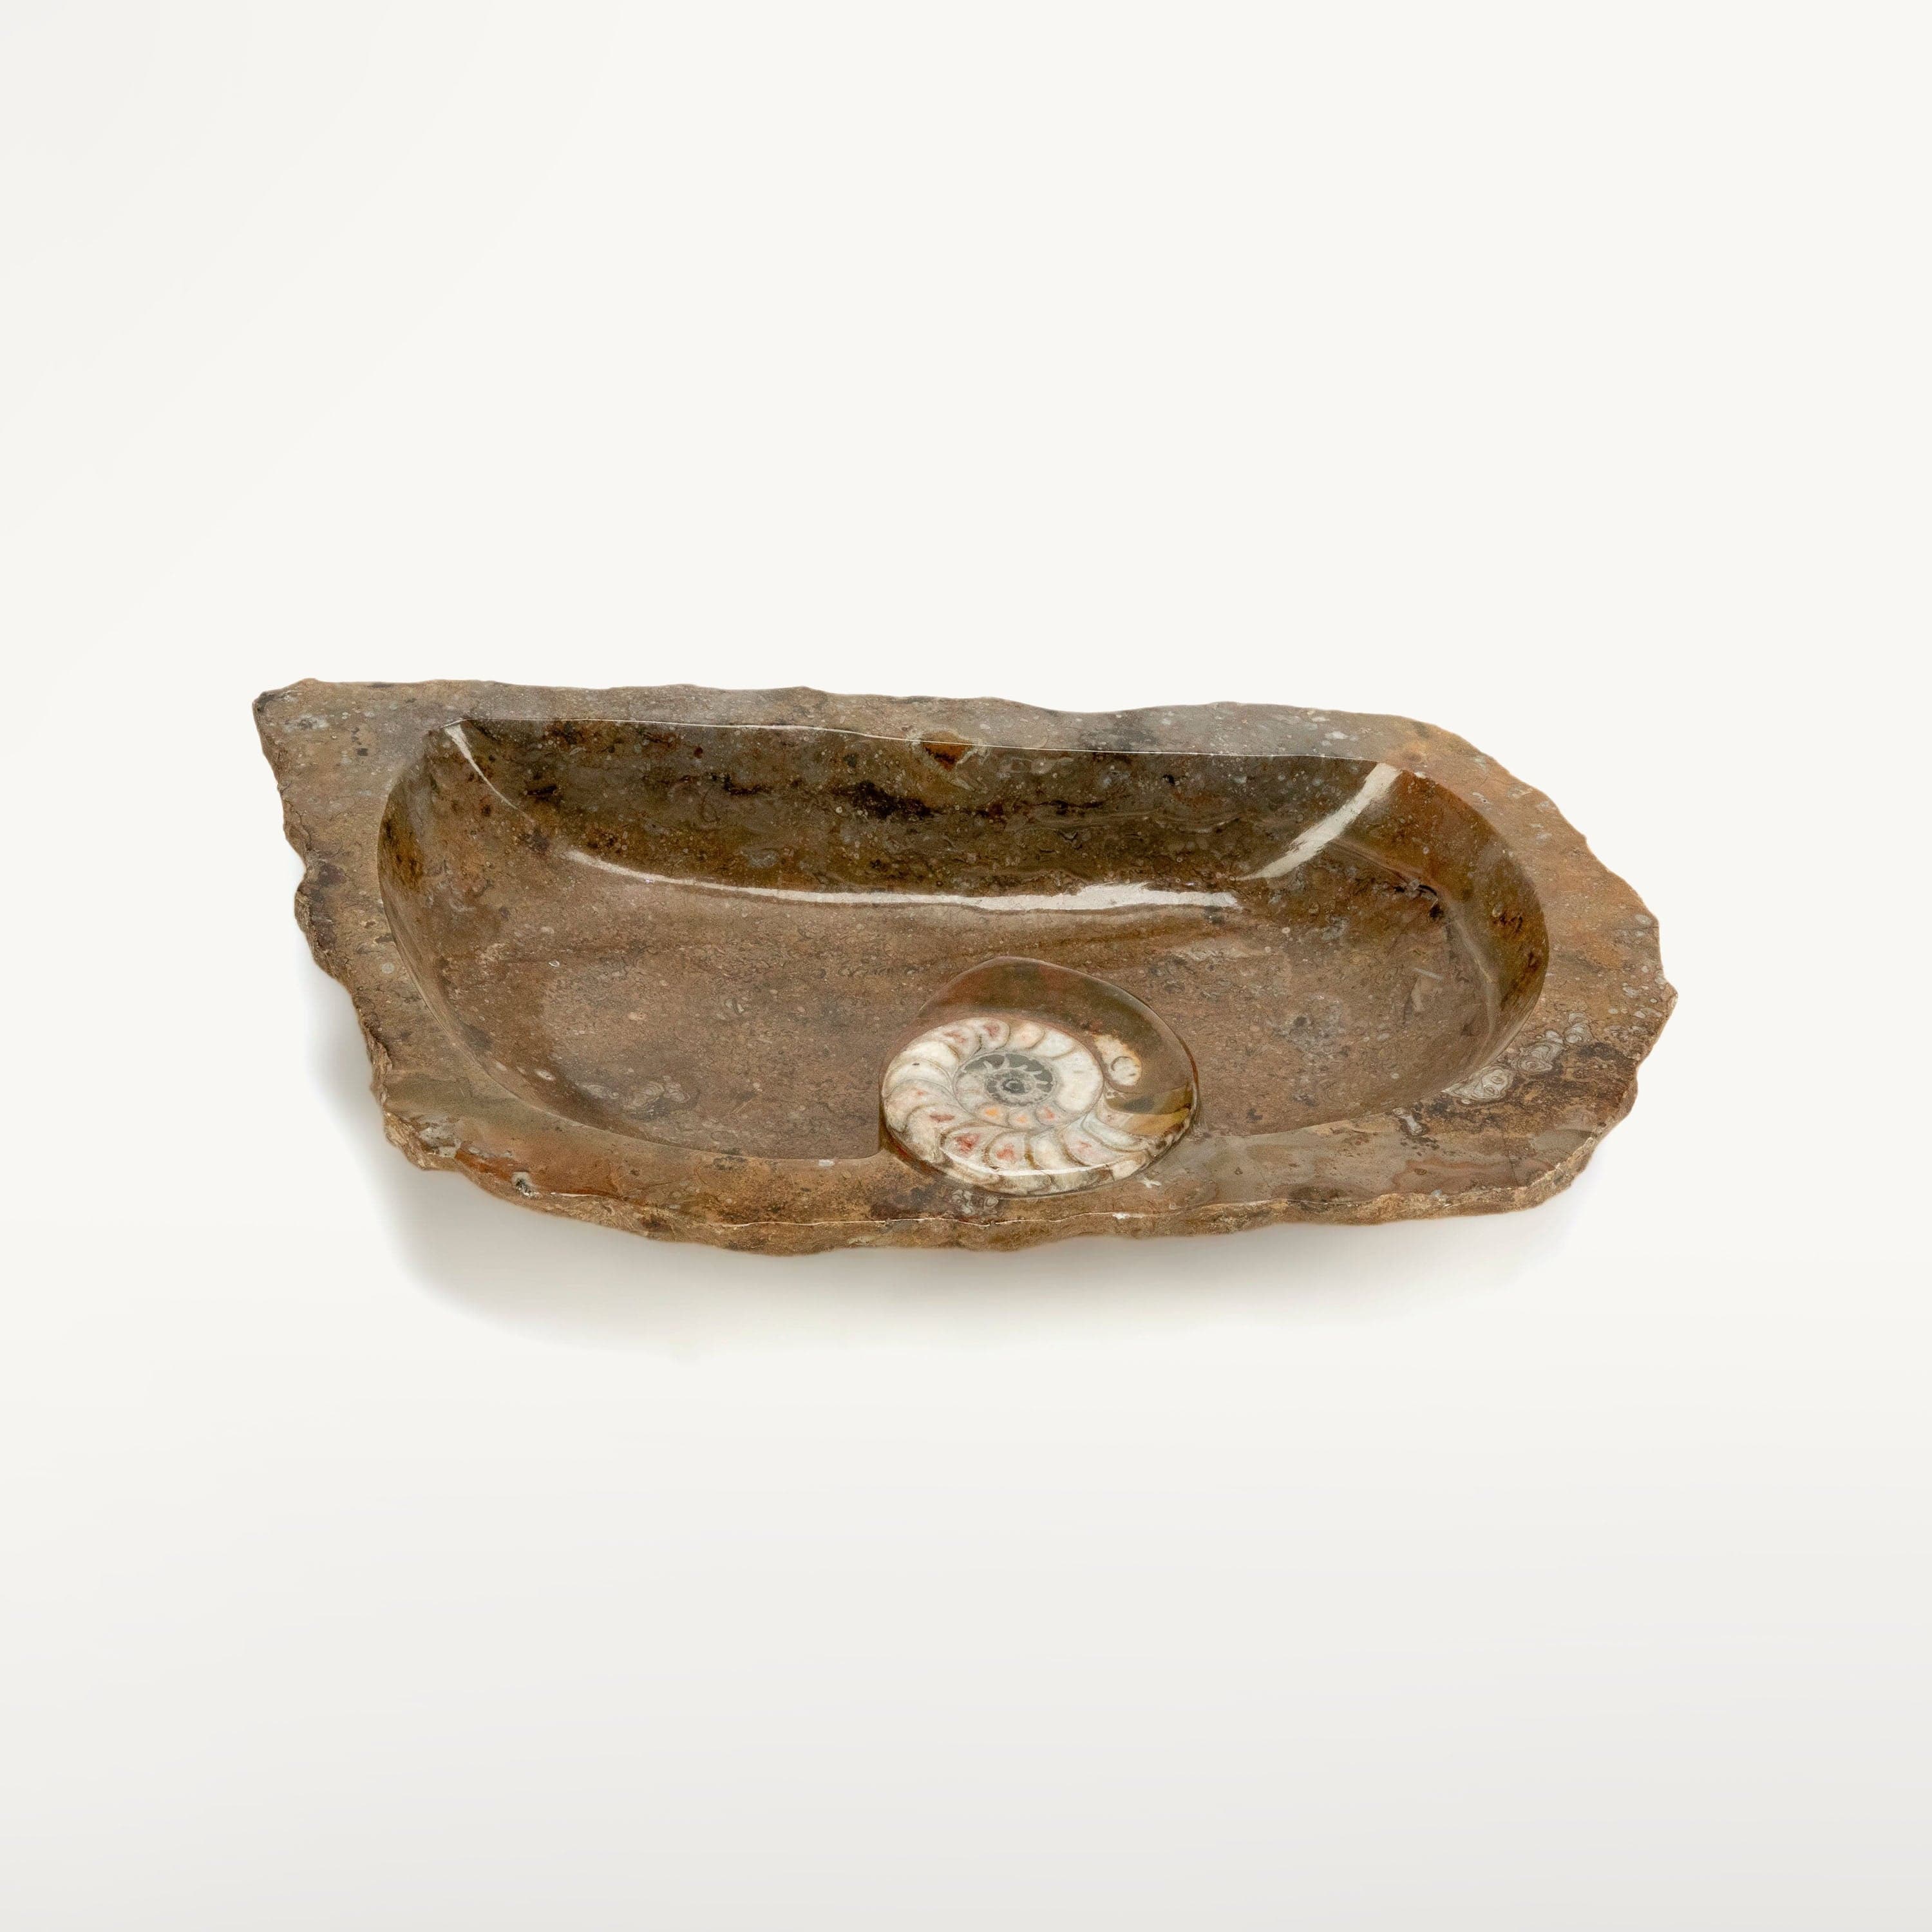 KALIFANO Ammonite Ammonite Fossil Sink Bowl from Morocco - 25" AMBOWL3200.003